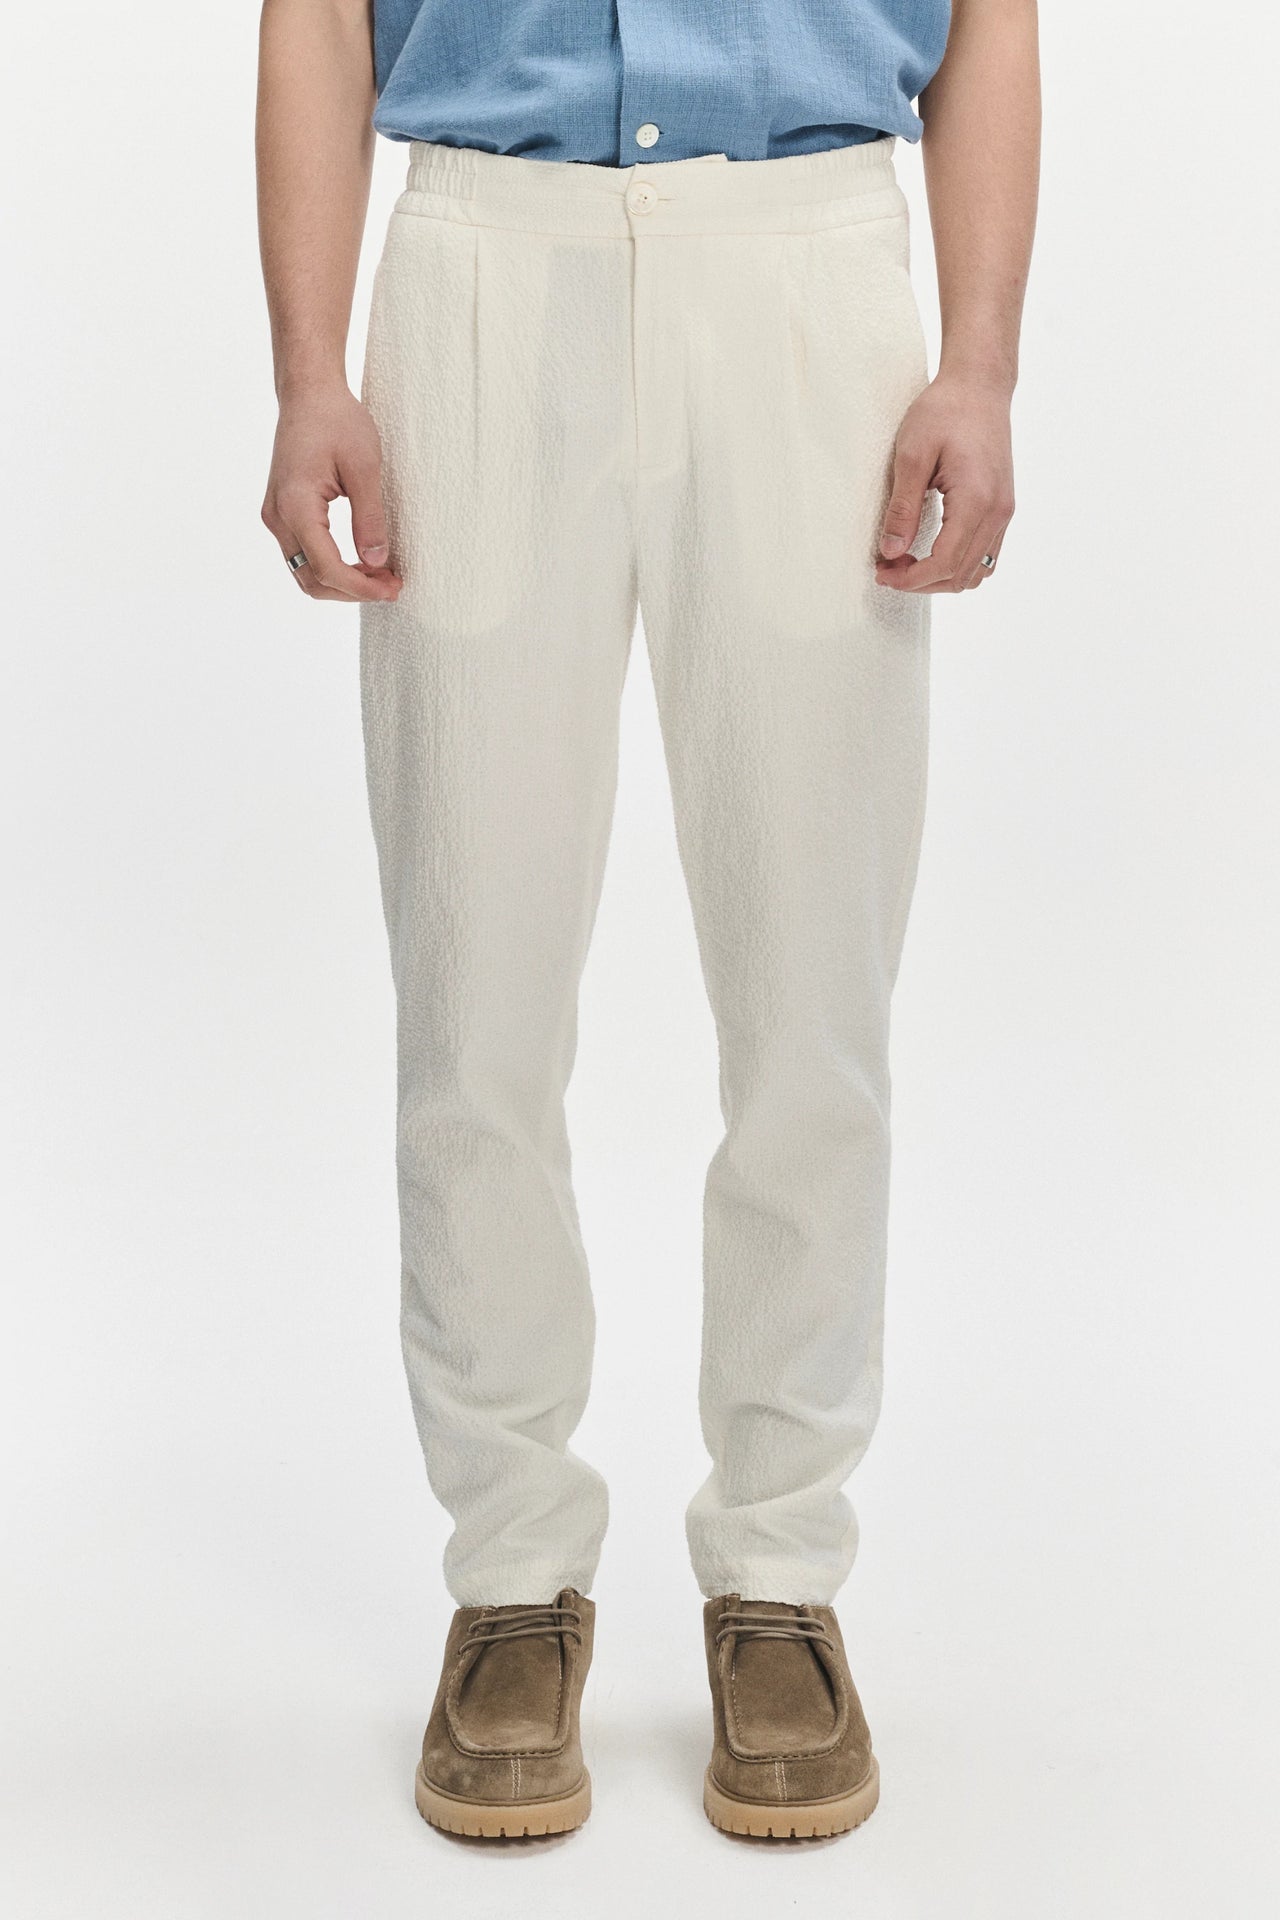 Garden Trousers in a White Italian Cotton and Linen Seersucker by Subalpino